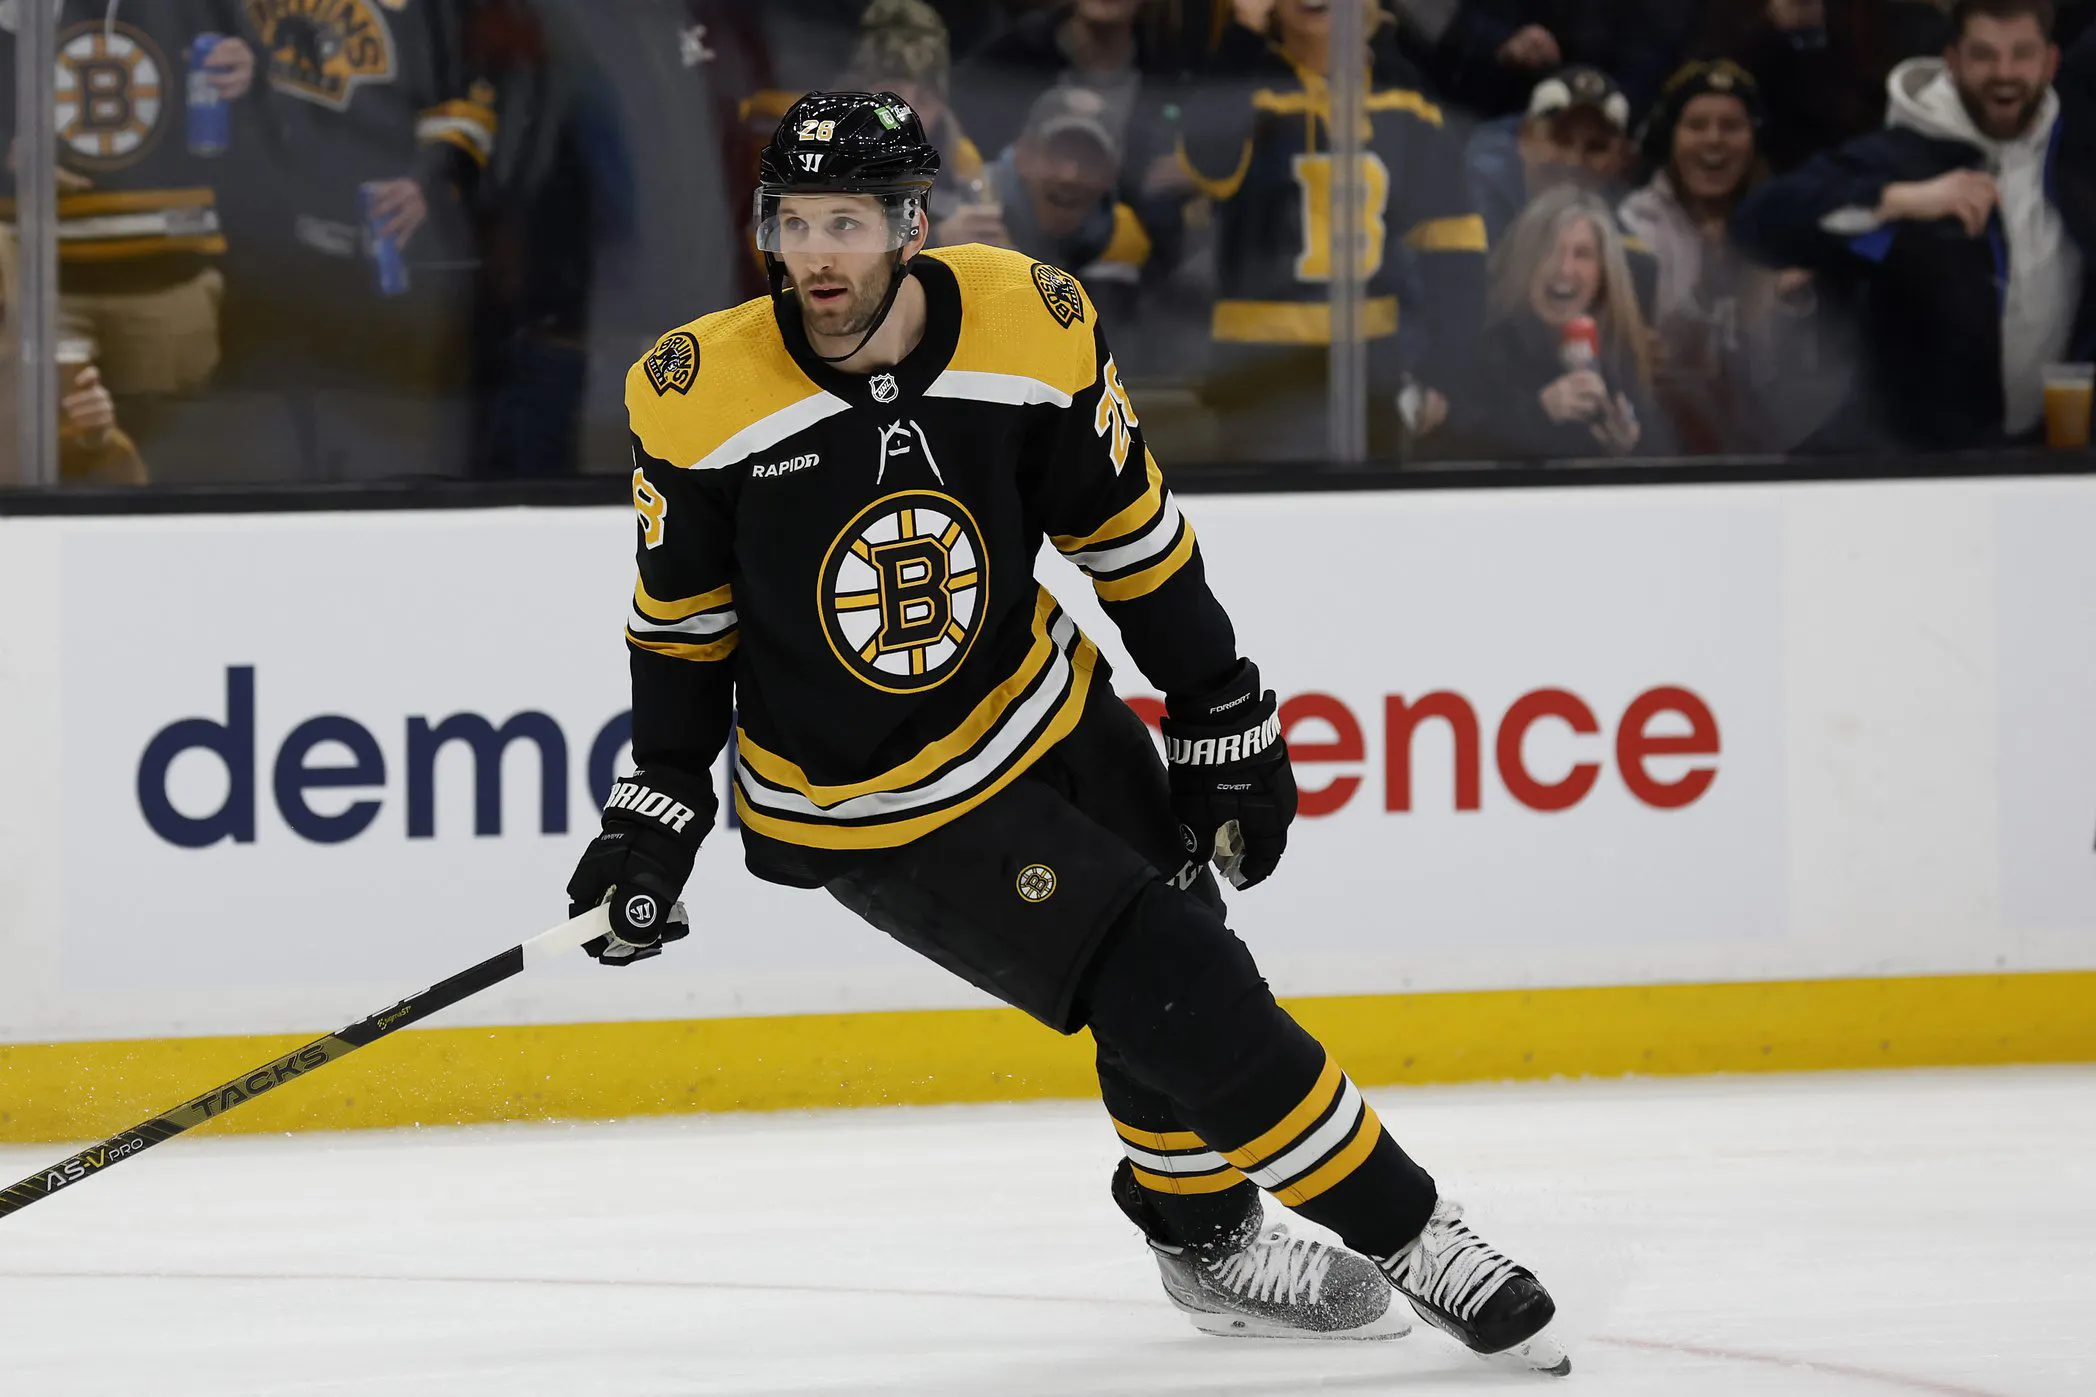 Boston Bruins defenseman Derek Forbort to miss remainder of regular season